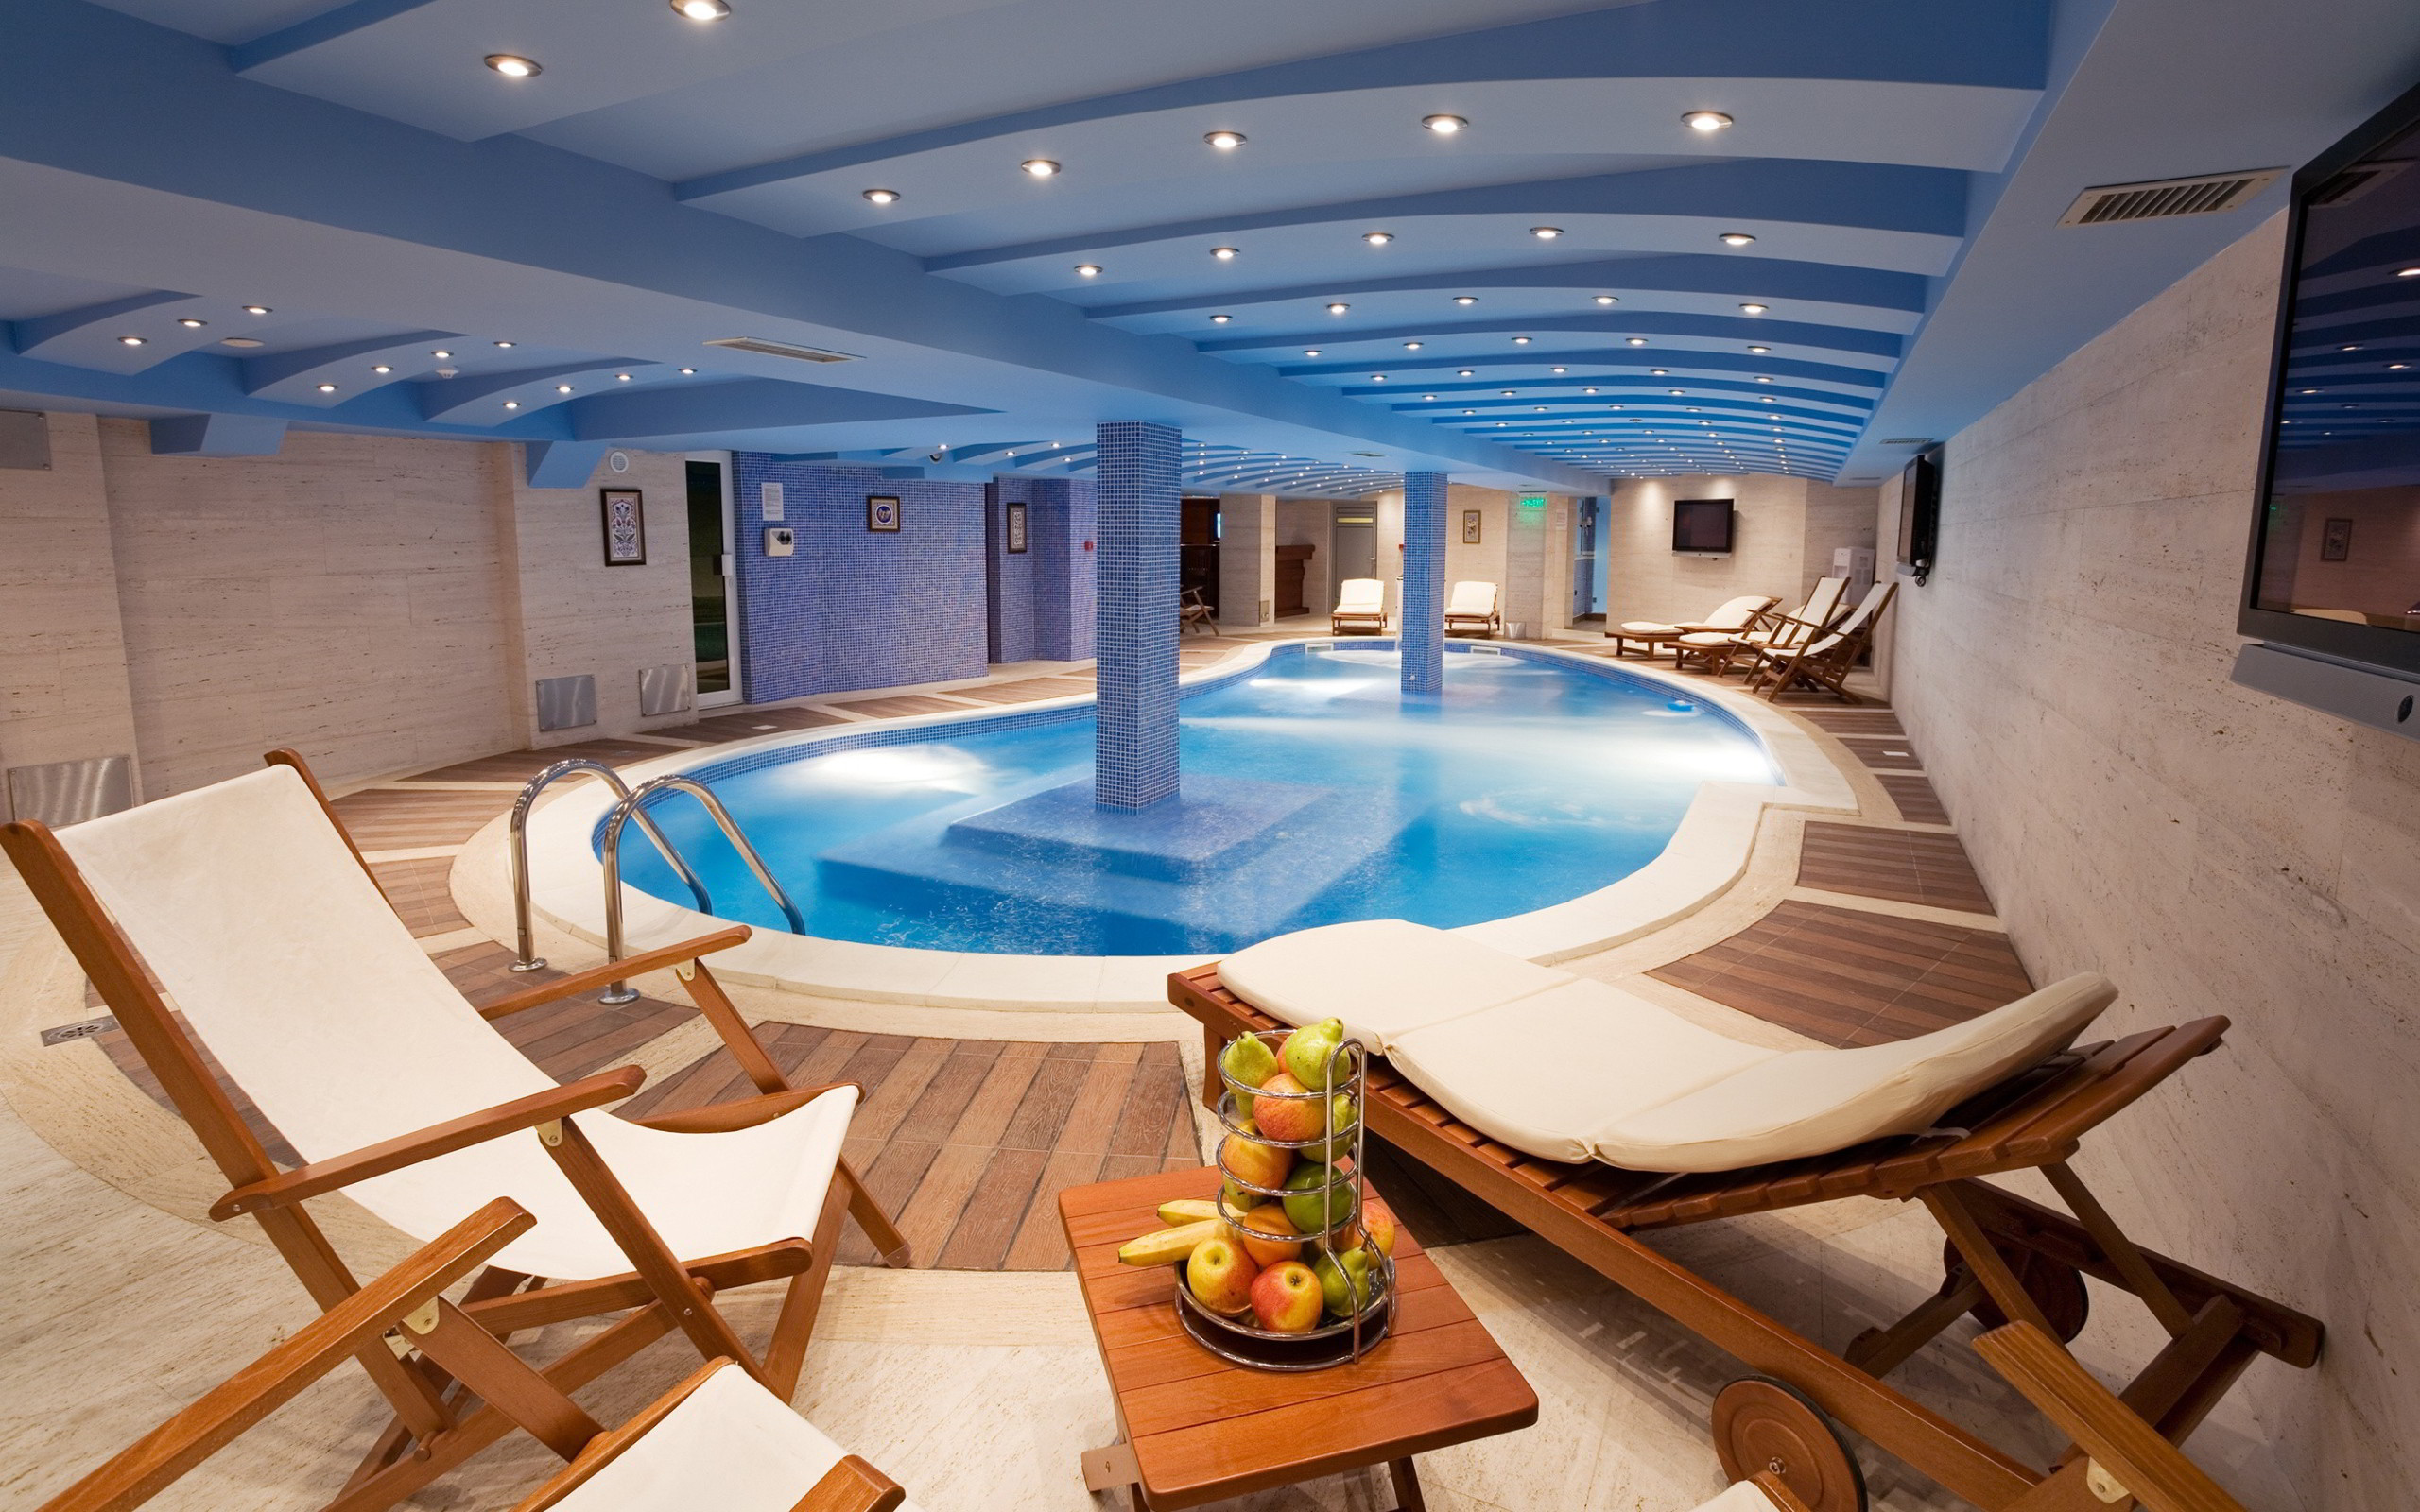 2560x1600 Luxury indoor swimming pool